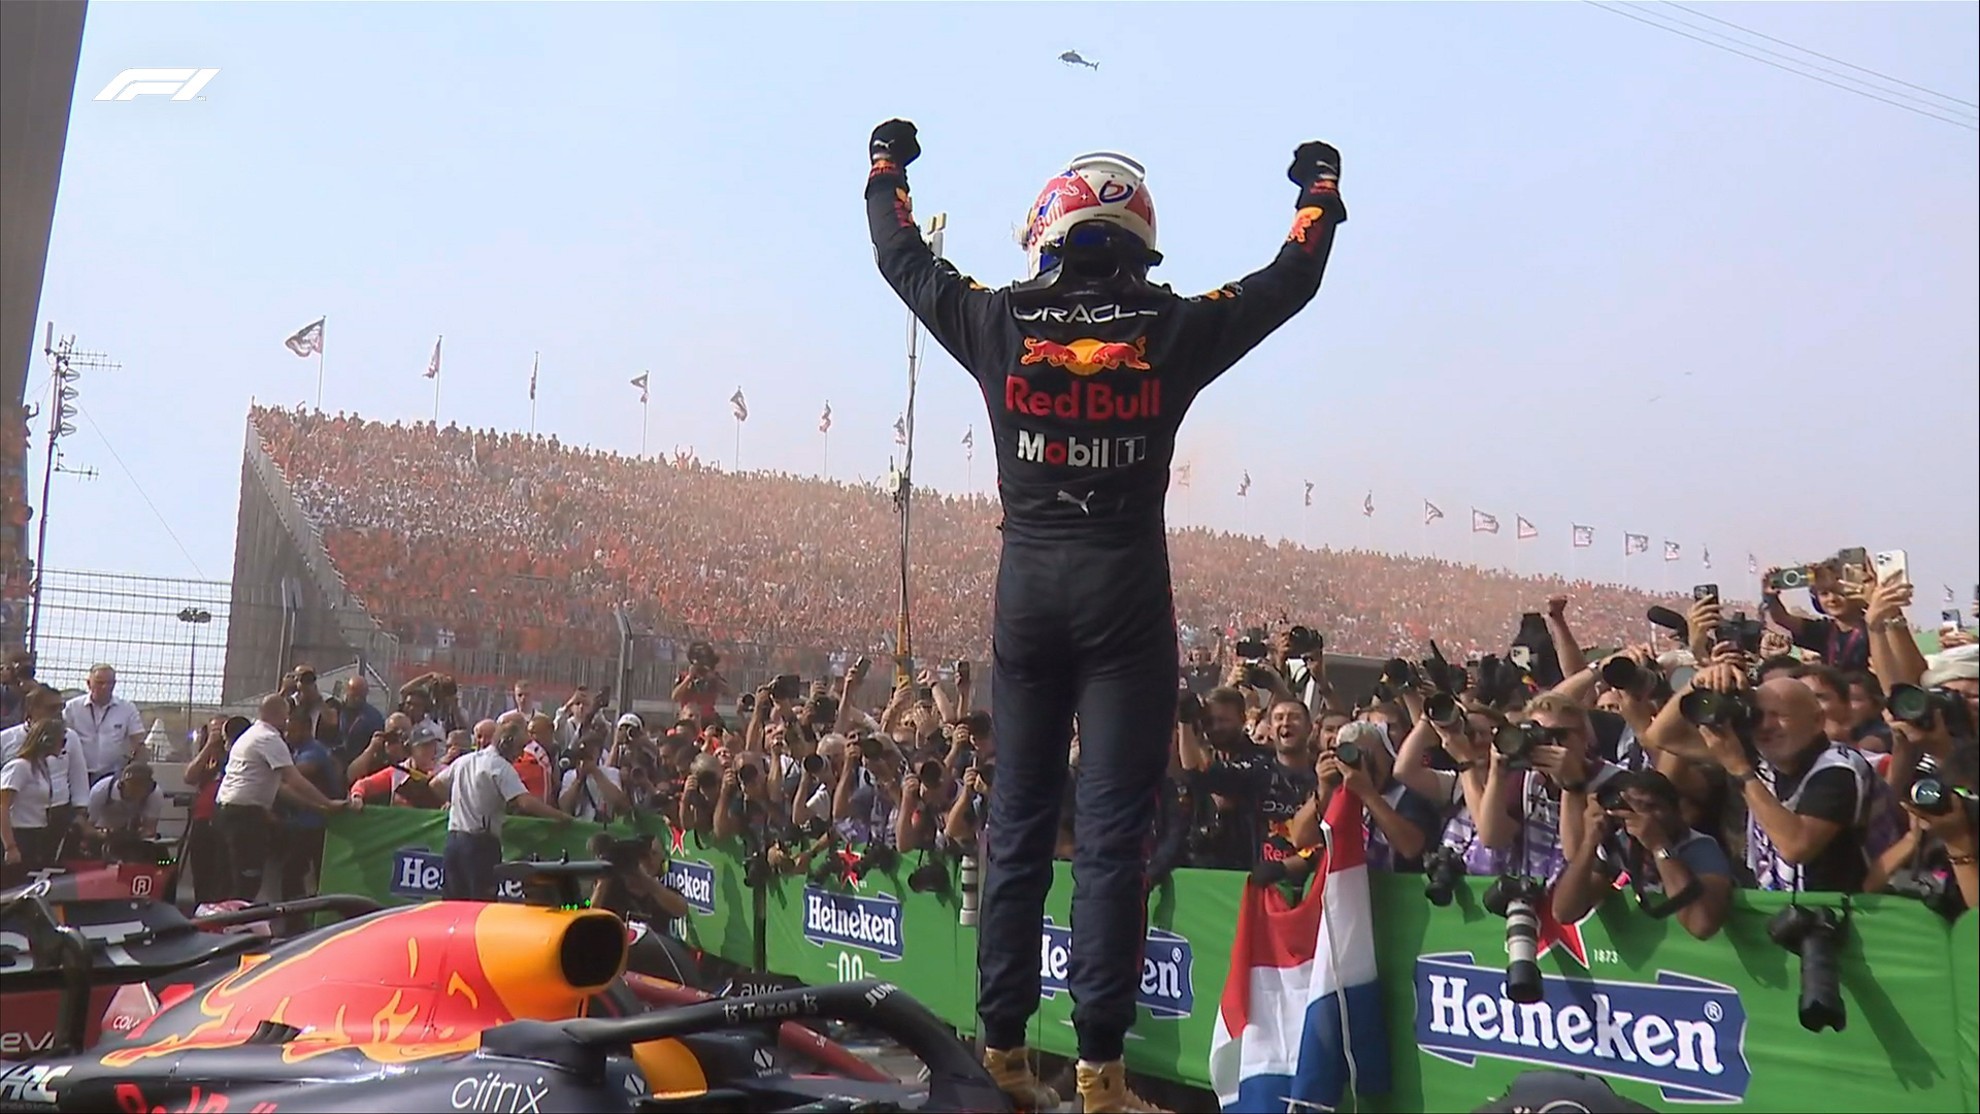 El piloto holandés celebra el triunfo.